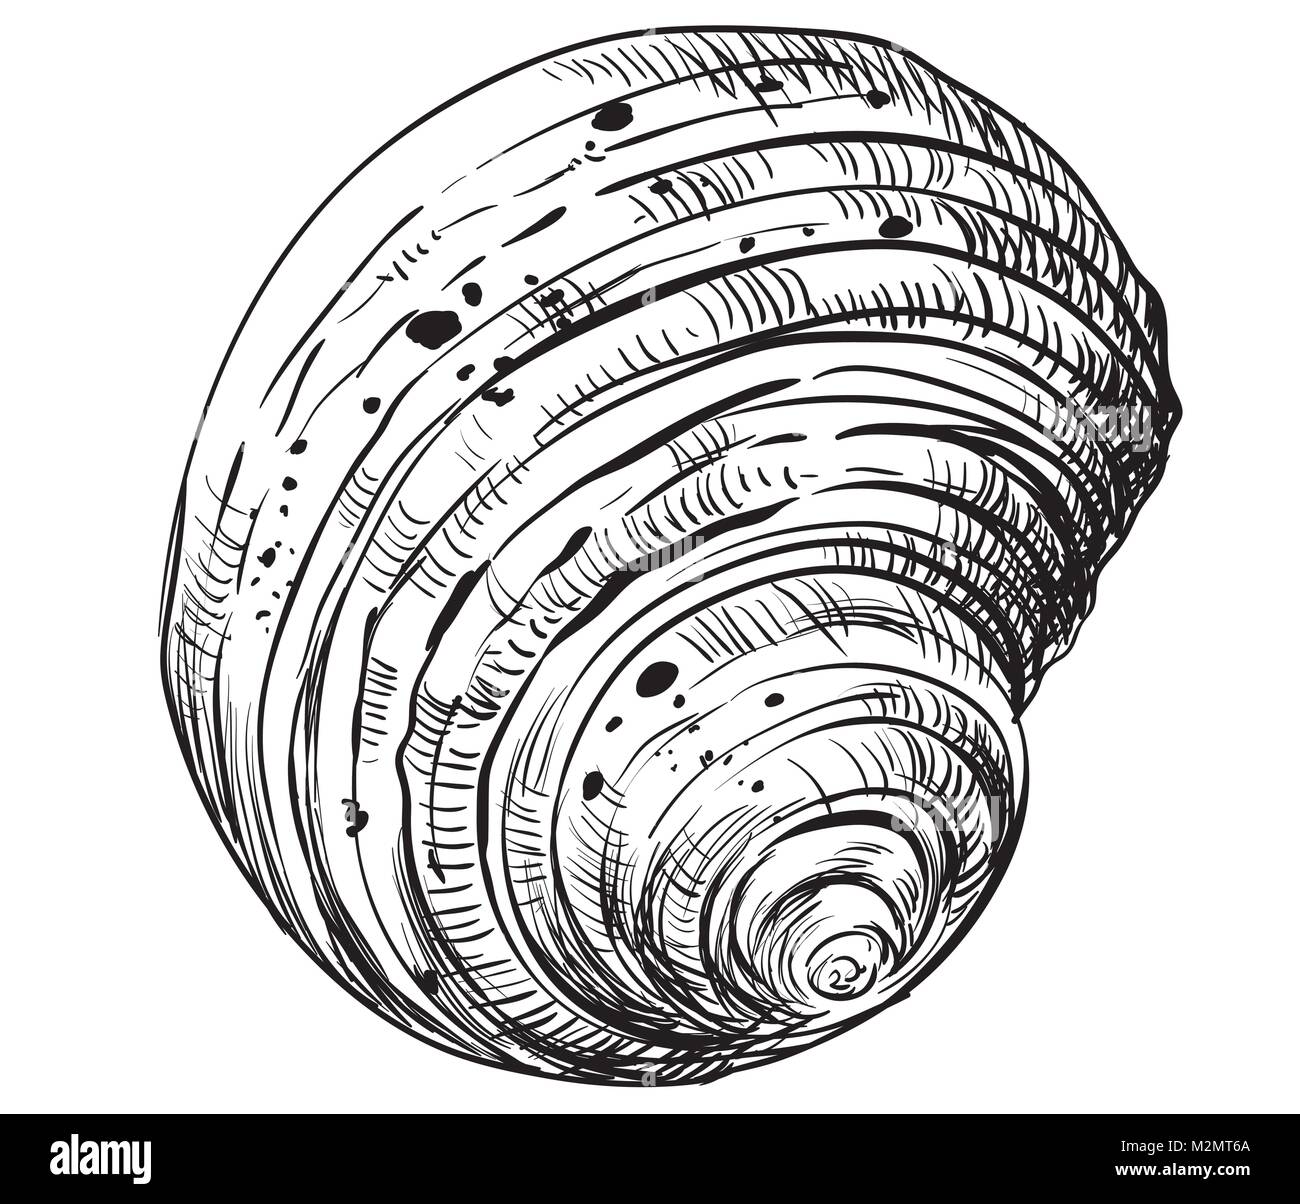 Hand drawing seashell. Vector monochrome illustration of swirl seashell isolated on white background. Stock Vector